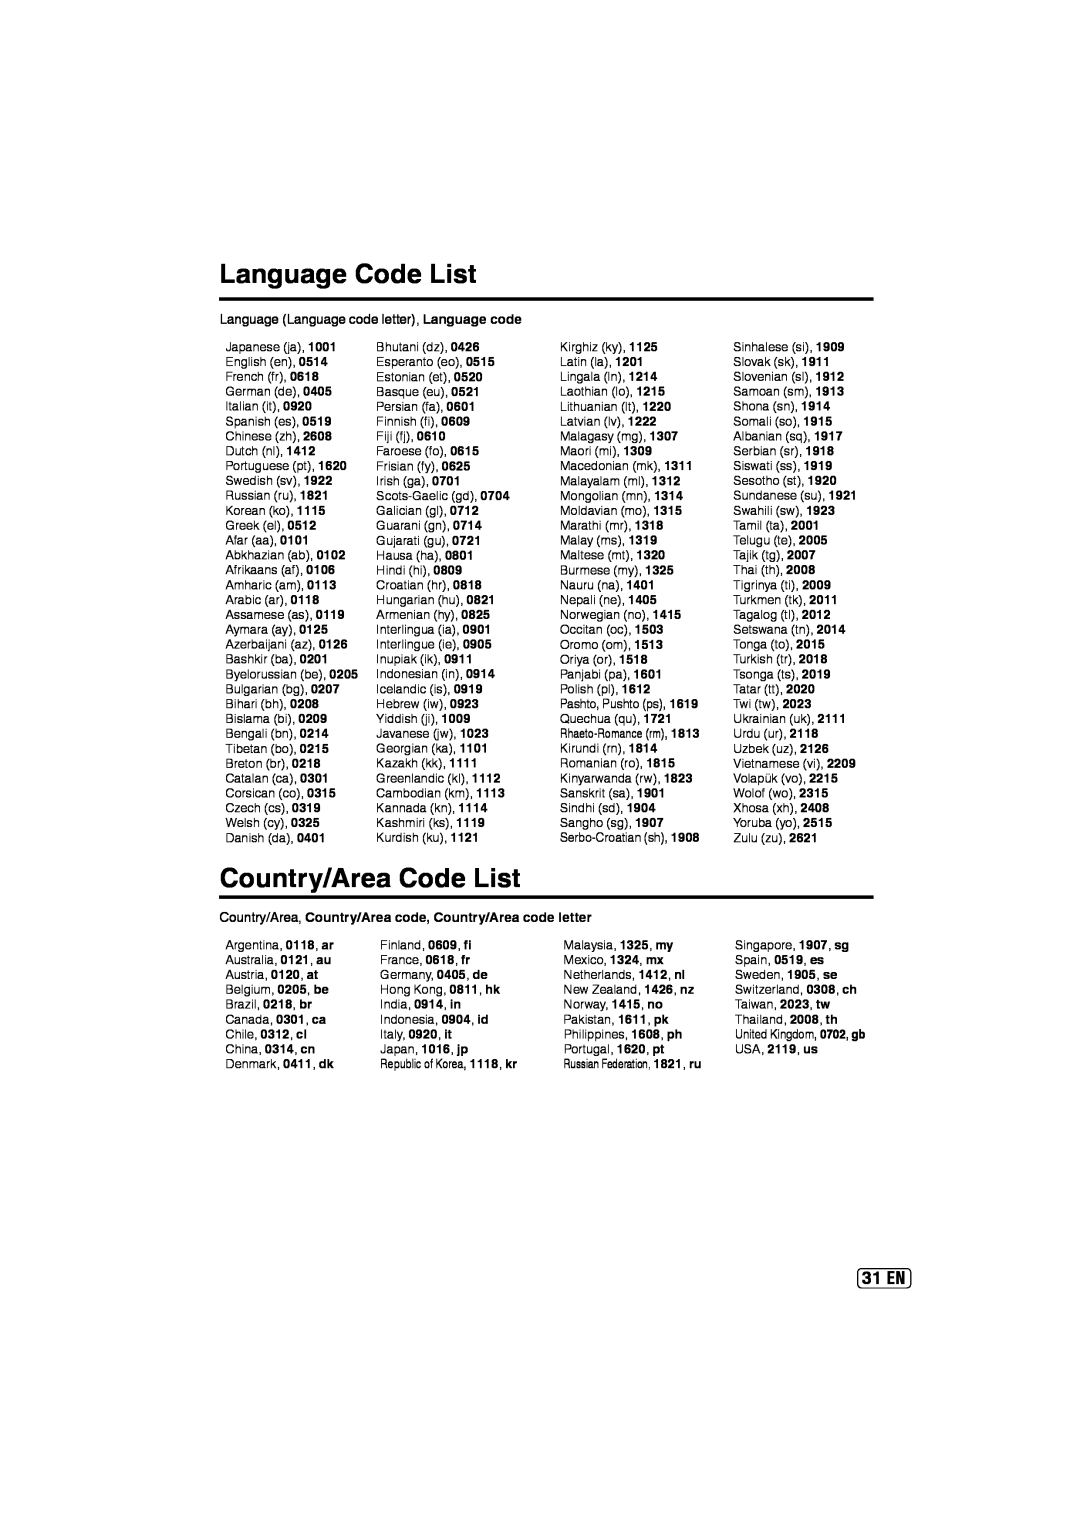 Sansui SLEDVD197 owner manual Language Code List, Country/Area Code List, 31 EN 